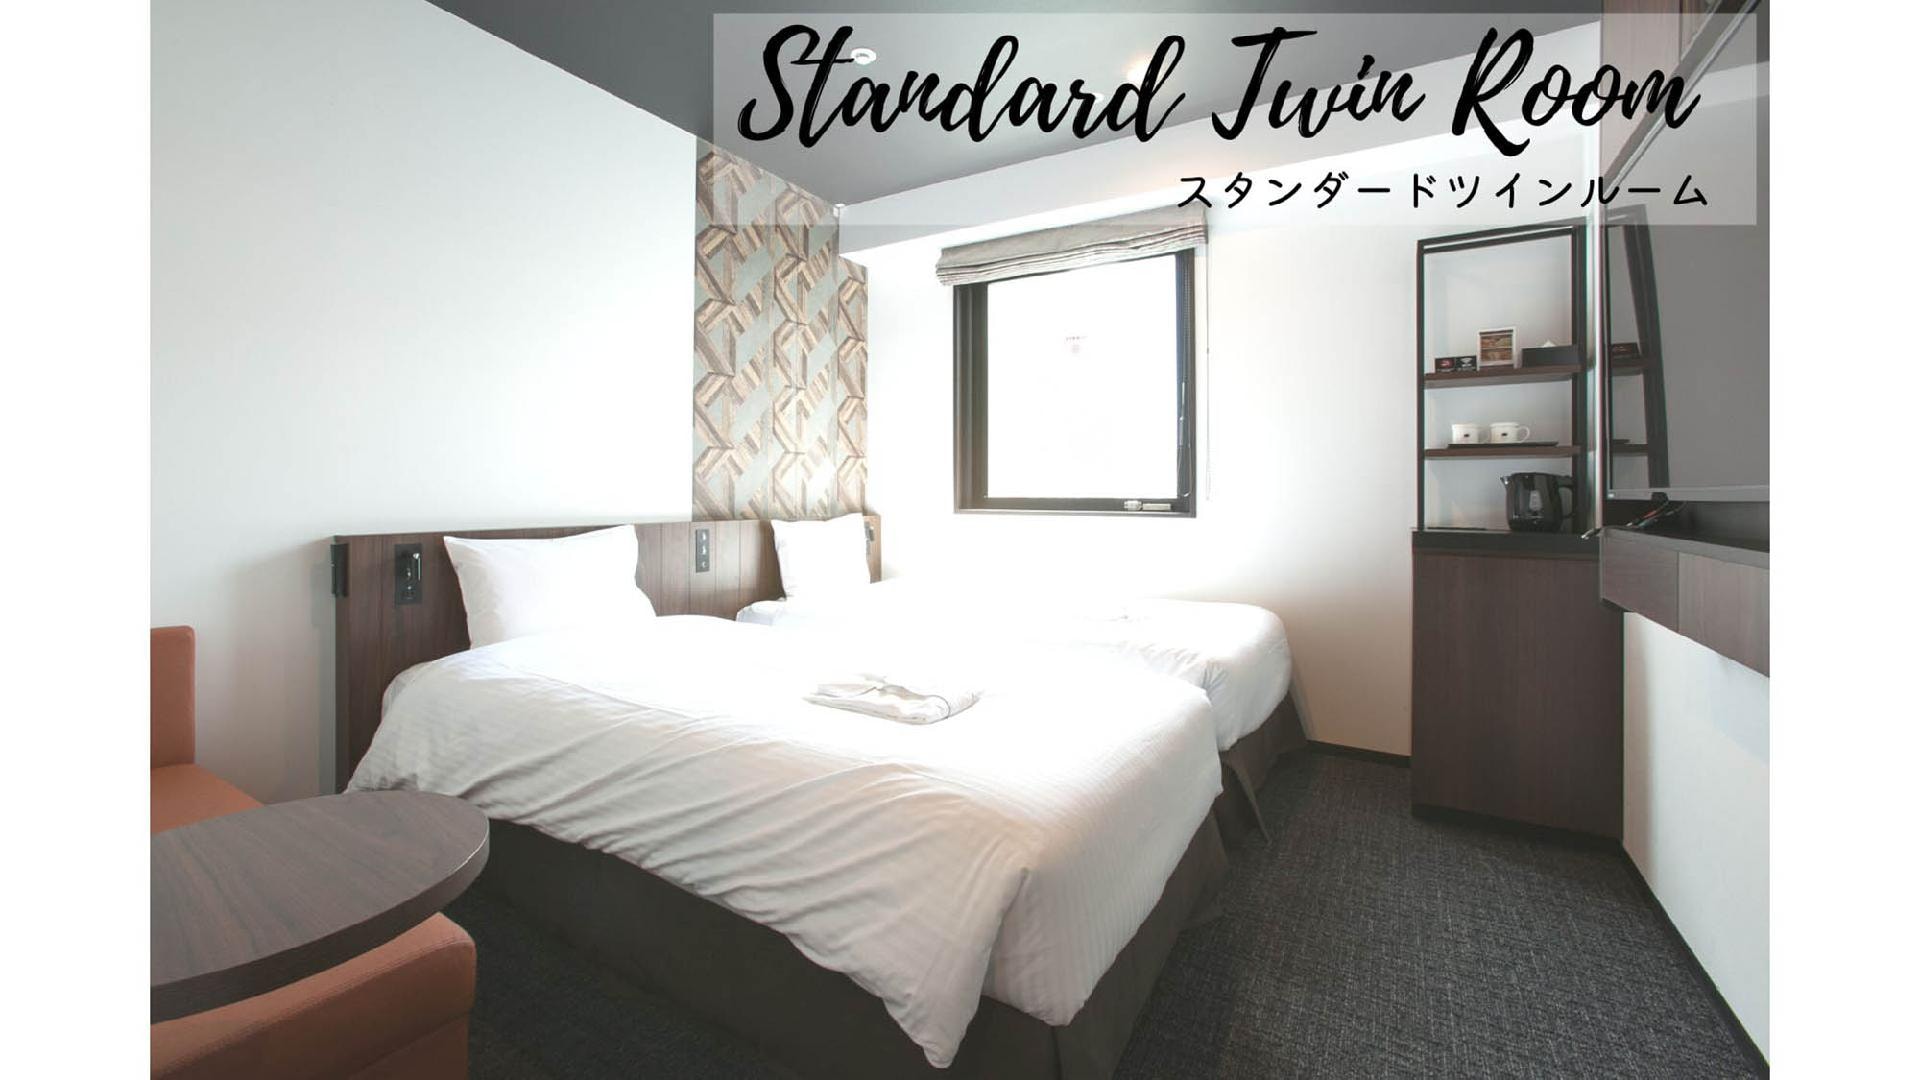 Standard twin room